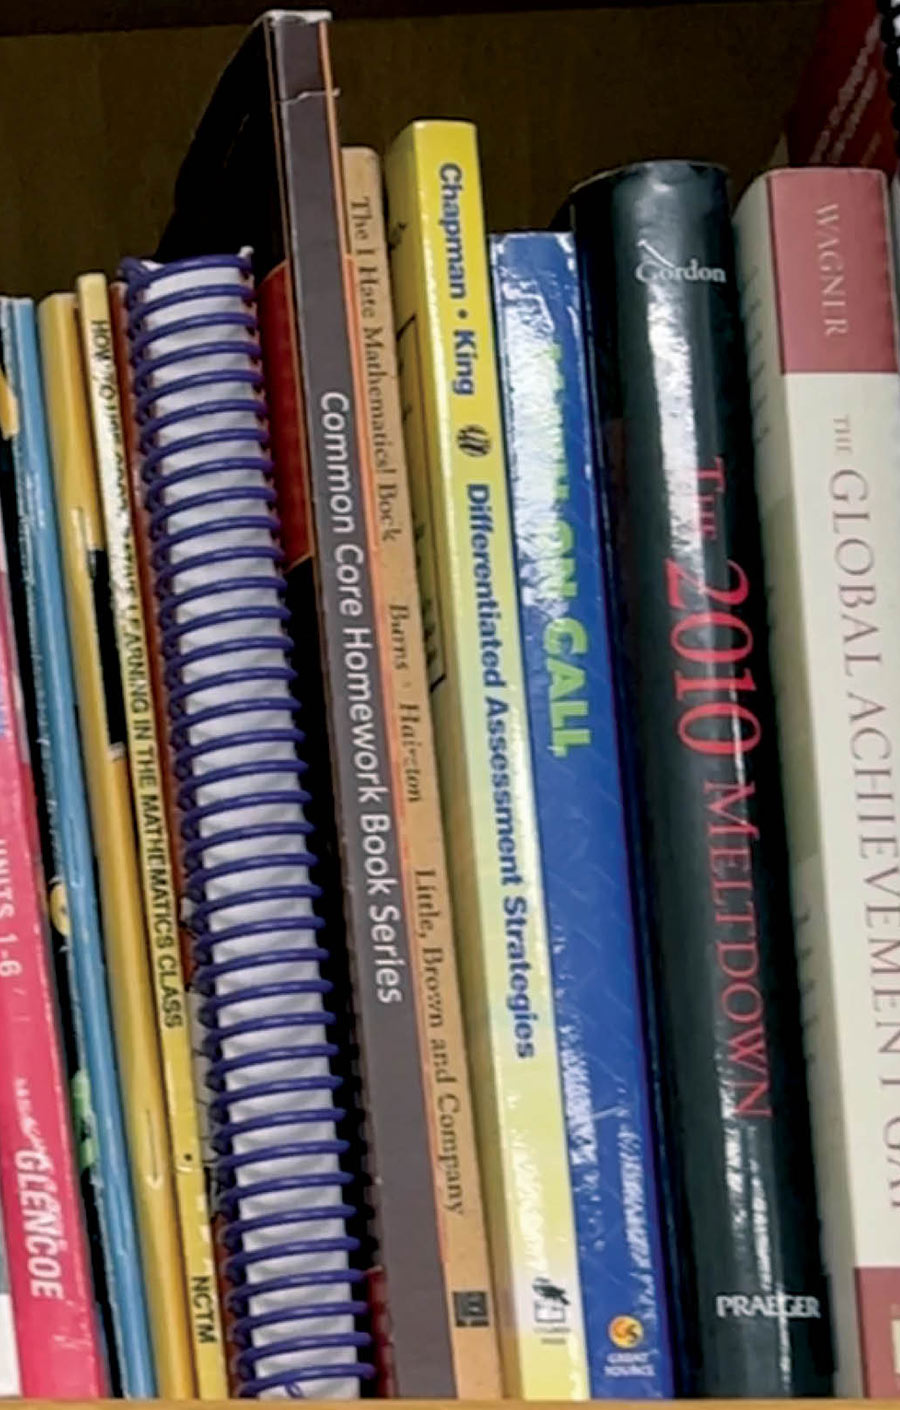 school textbooks on a shelf